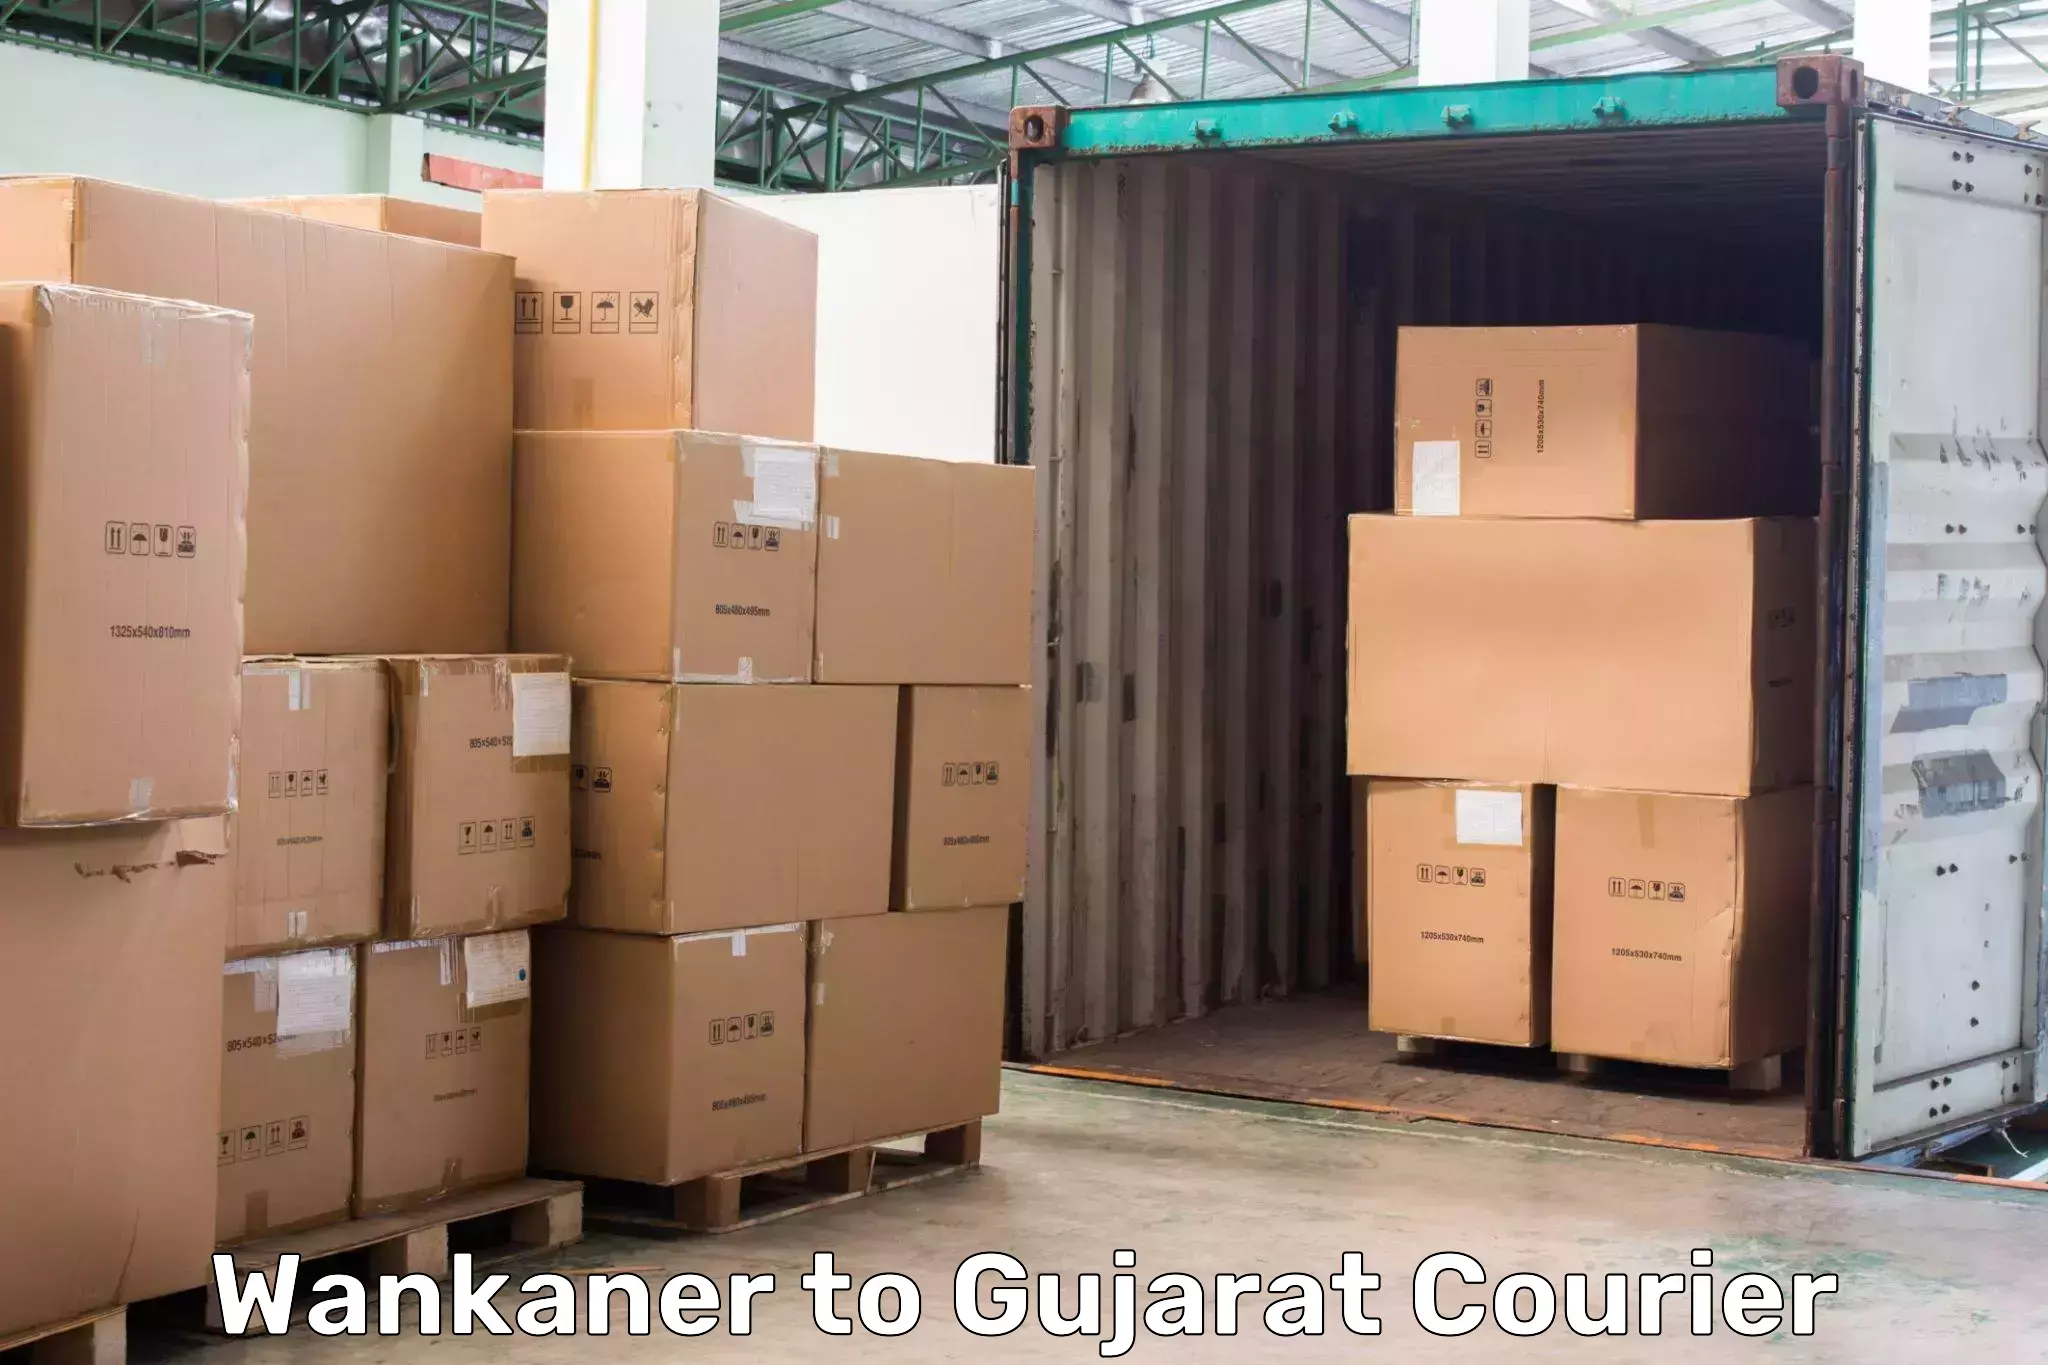 Urgent courier needs Wankaner to Keshod